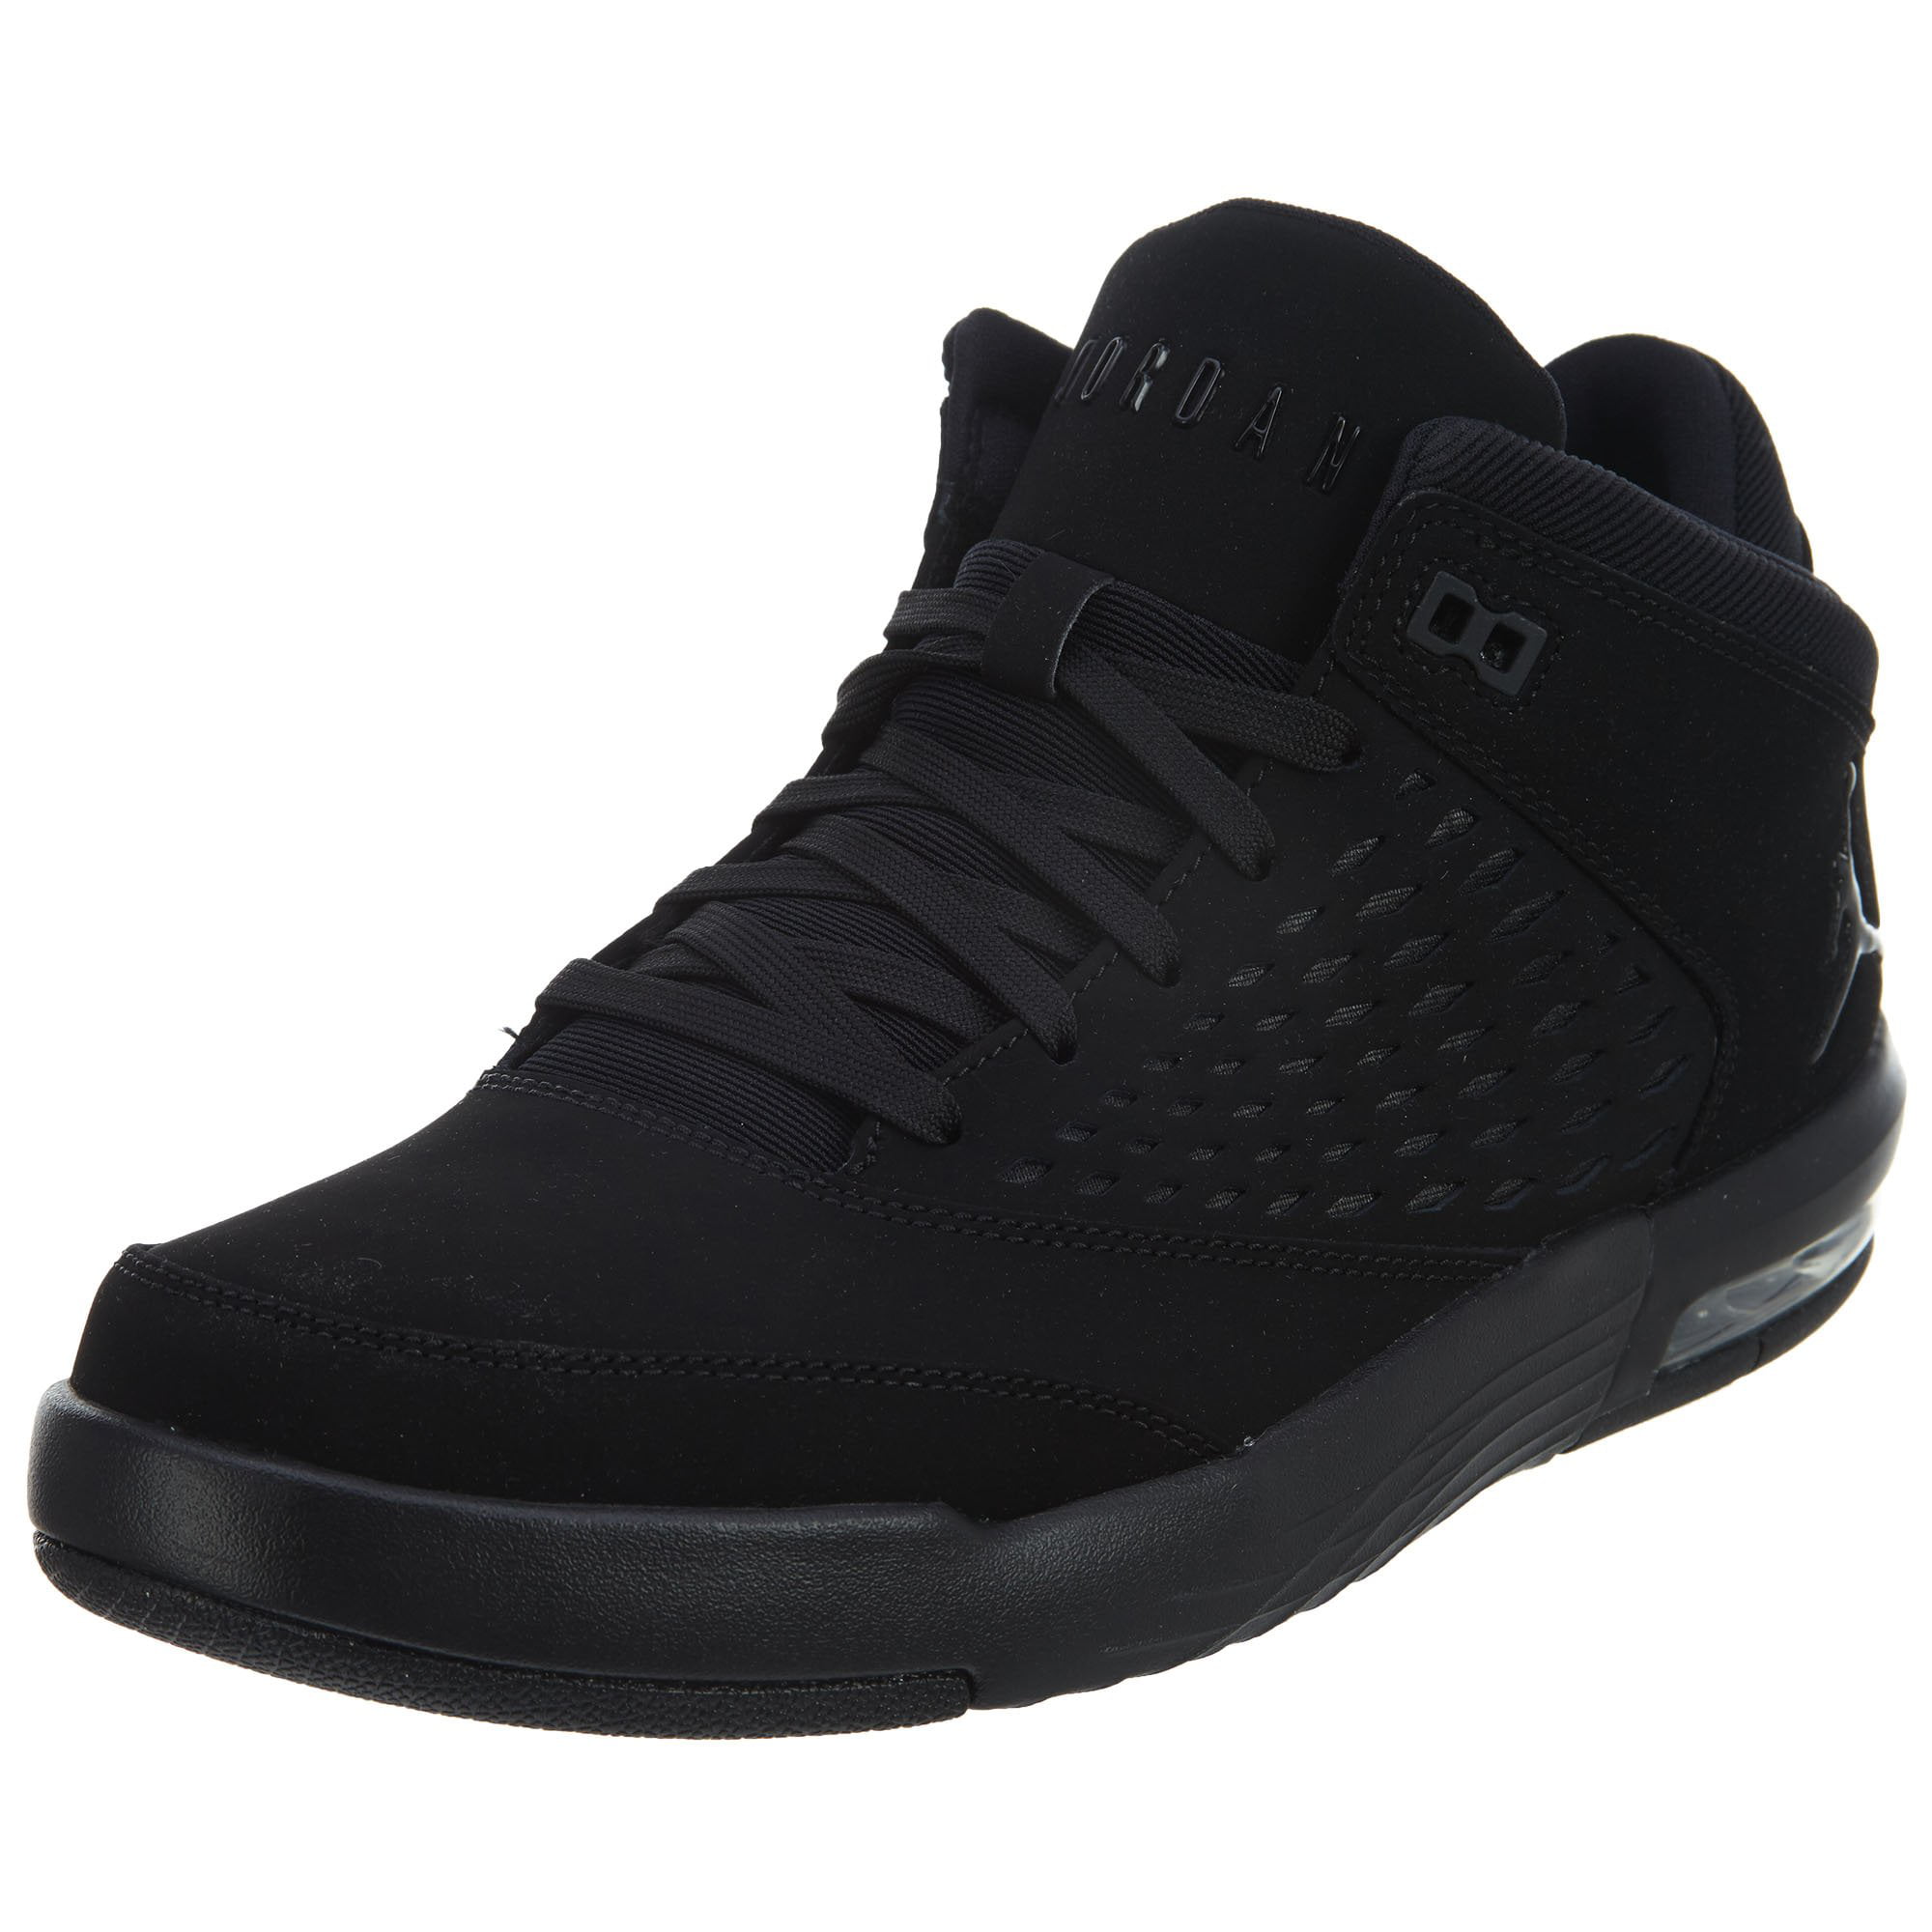 Nike 921196-010 : Men's Jordan Flight Origin 4 Basketball Shoe Black (7.5 D(M) US)